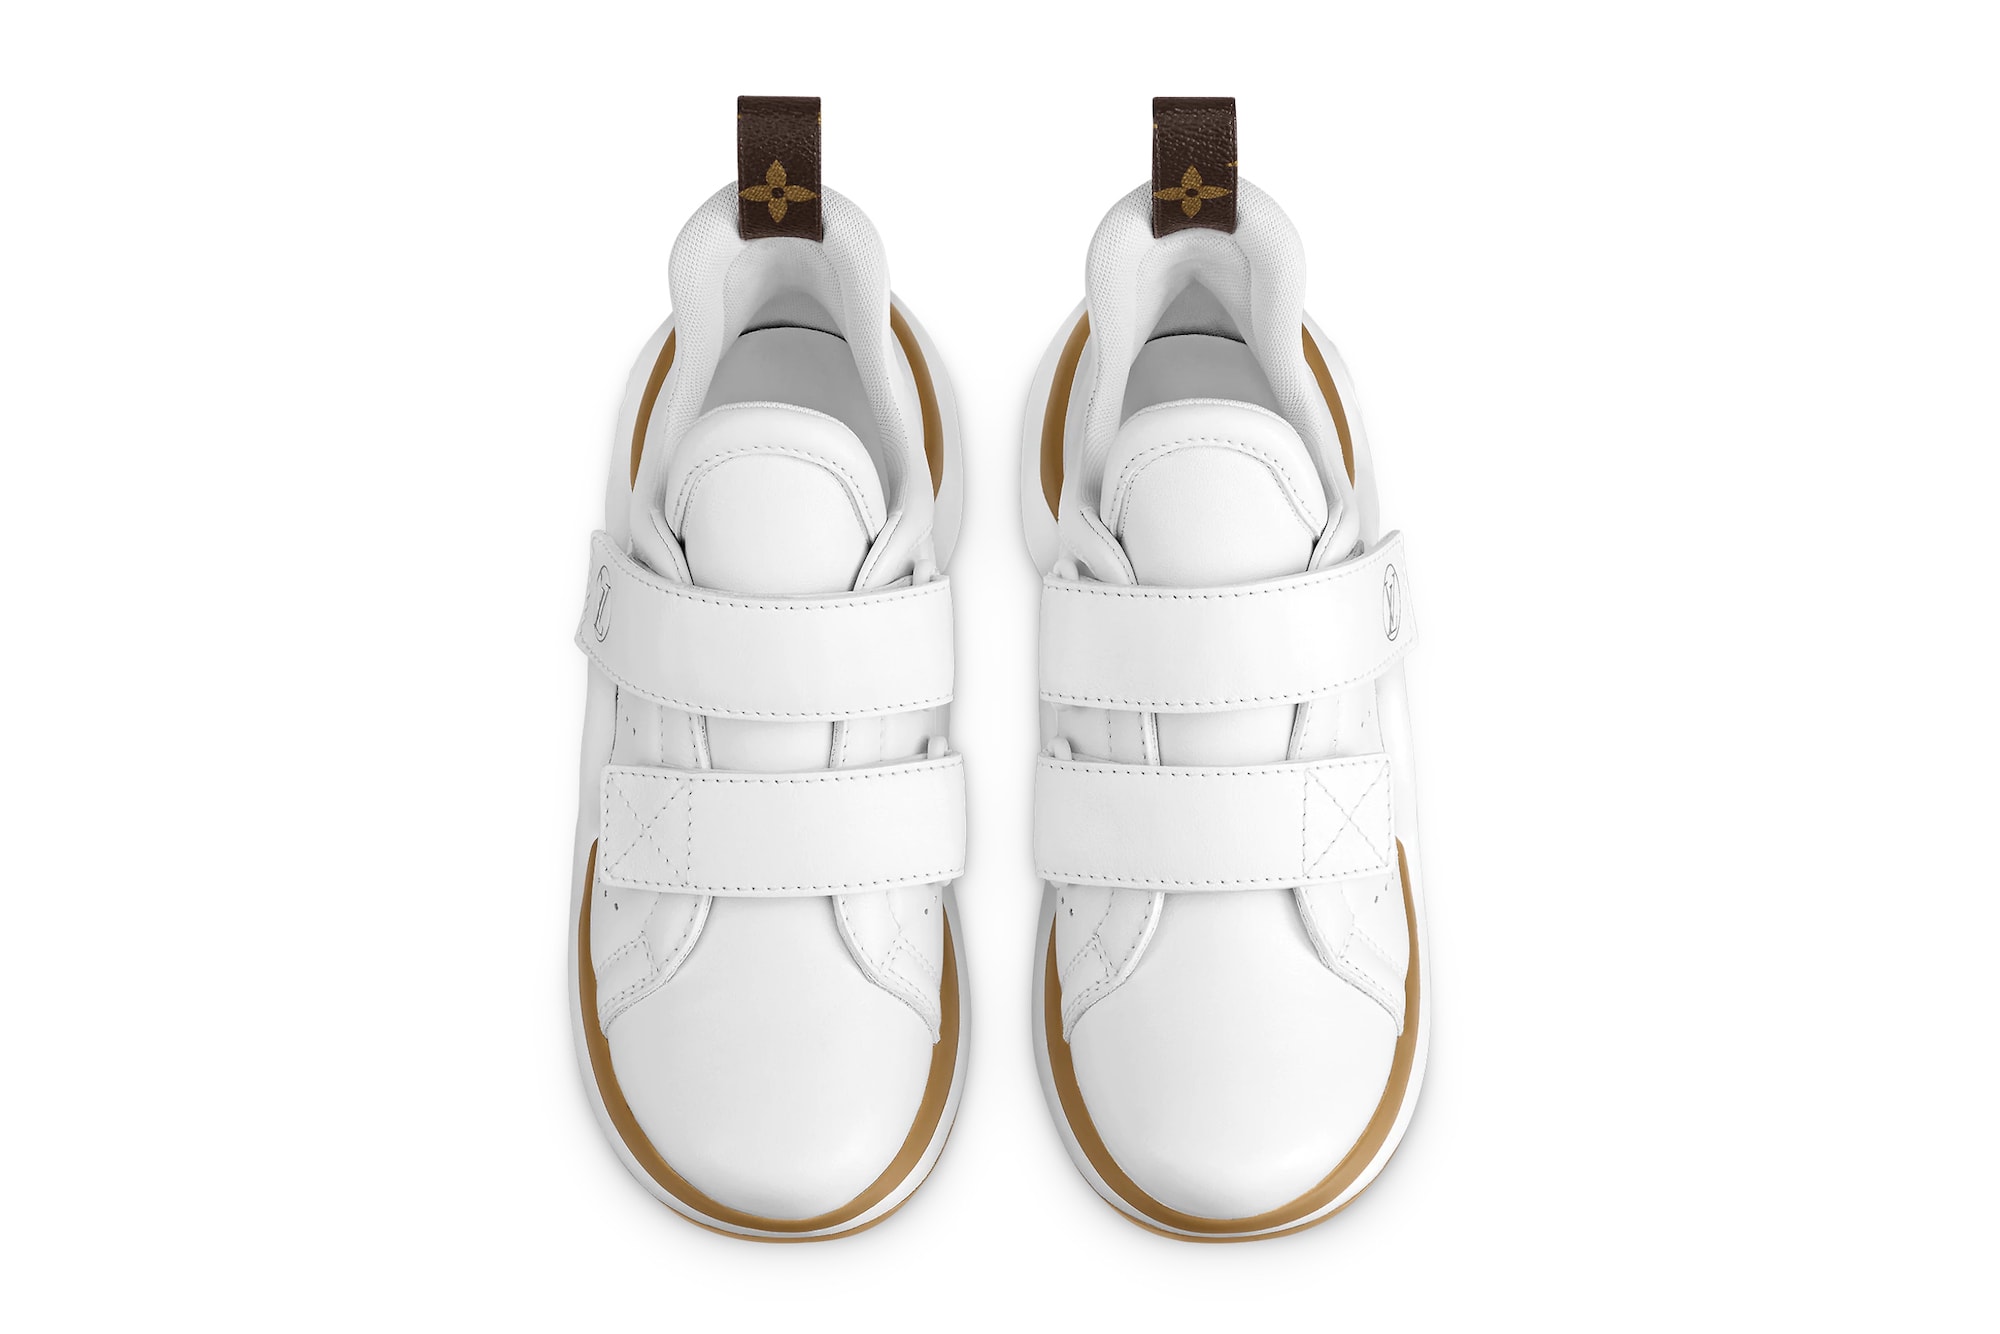 Louis Vuitton Archlight Velcro Straps Design Sneaker Shoe Silhouette